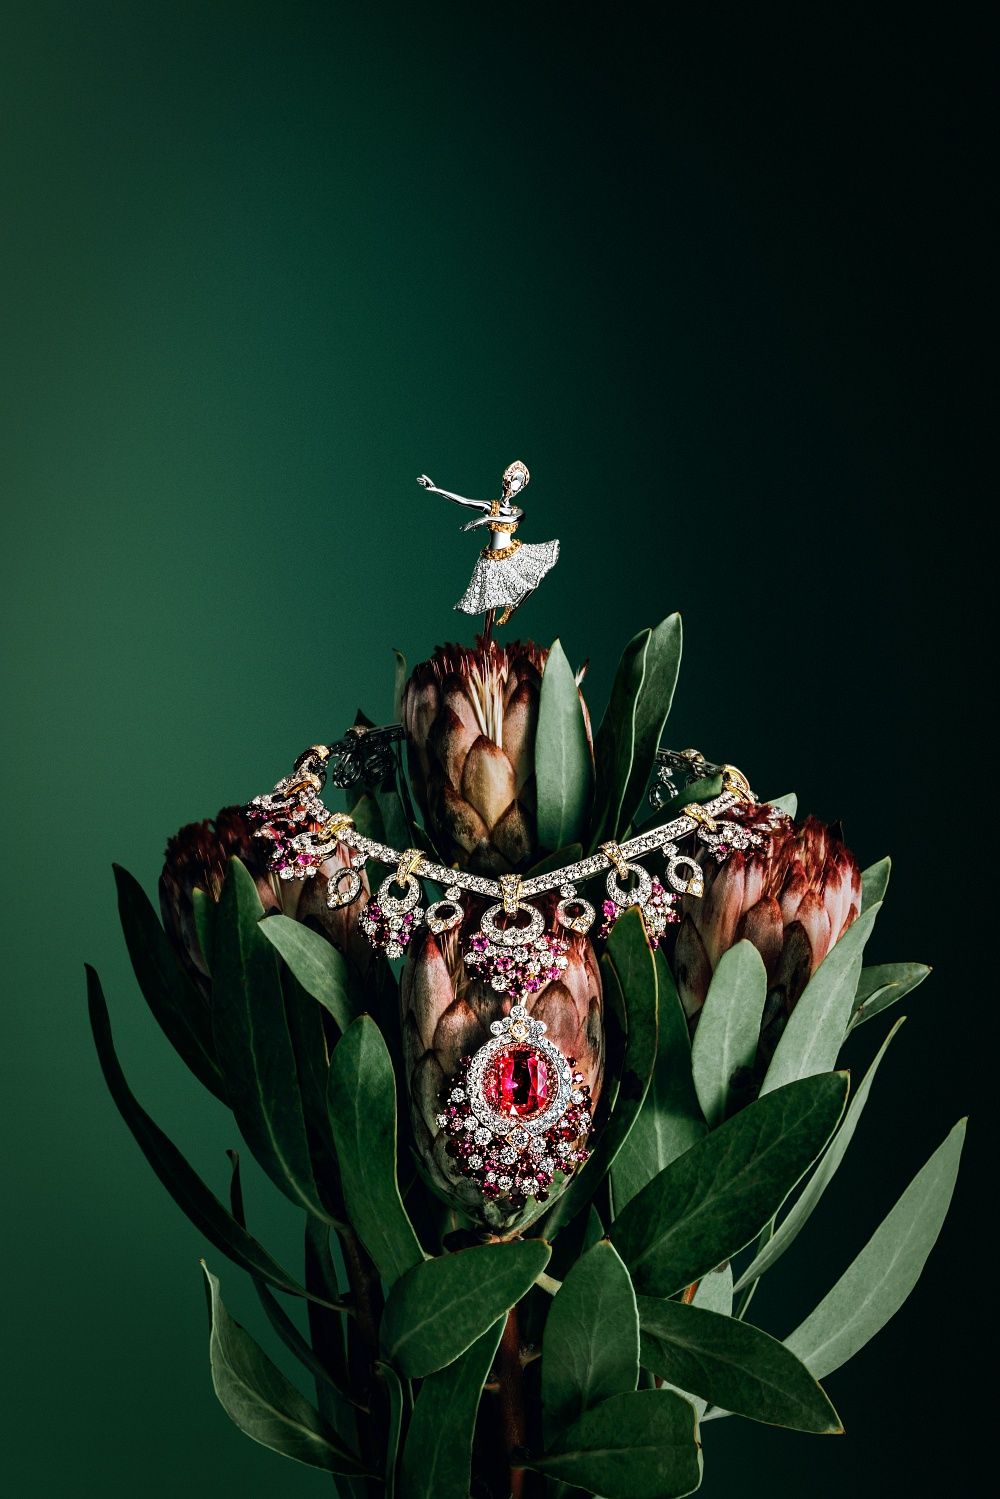 Bulgari Magnifica High Jewelry overflows with ultra-rare gemstones